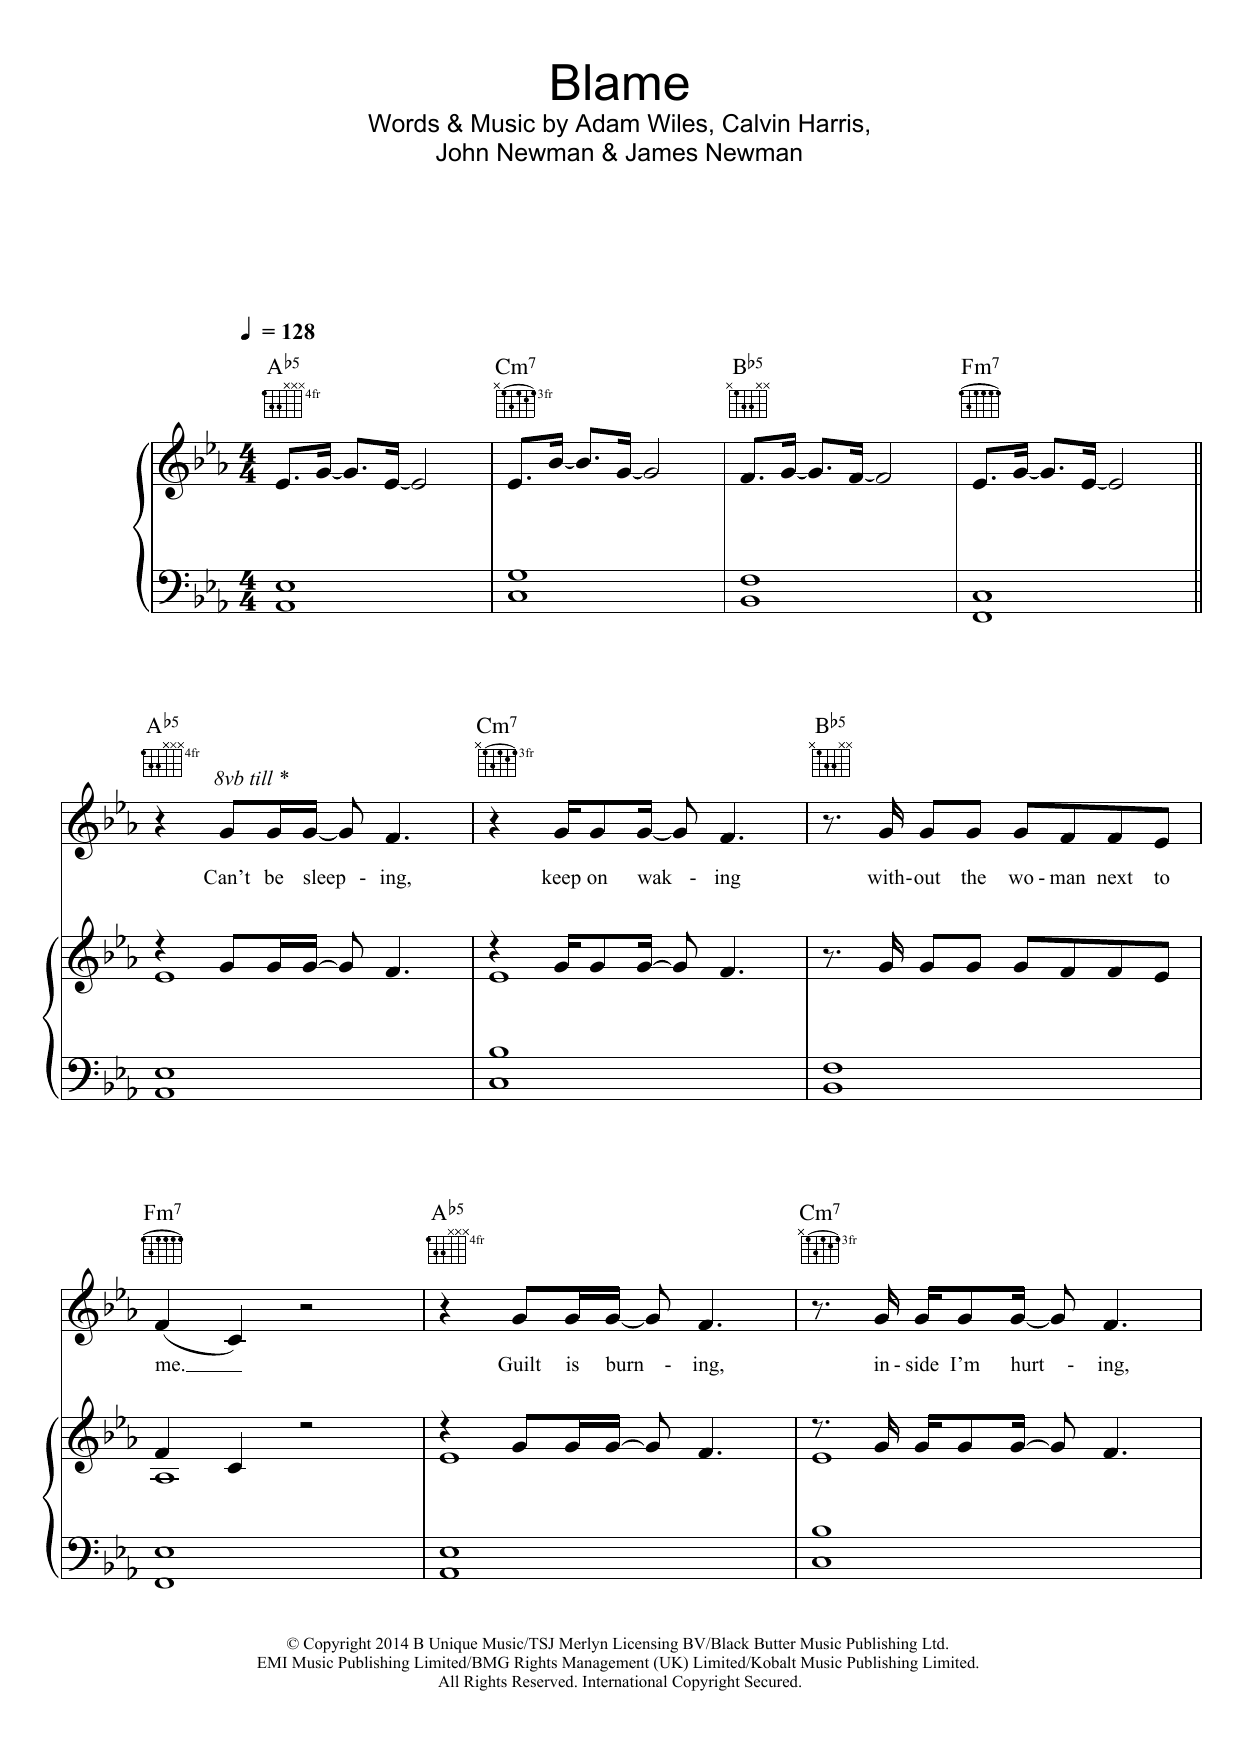 Calvin Harris Blame (feat. John Newman) Sheet Music Notes & Chords for Piano, Vocal & Guitar - Download or Print PDF